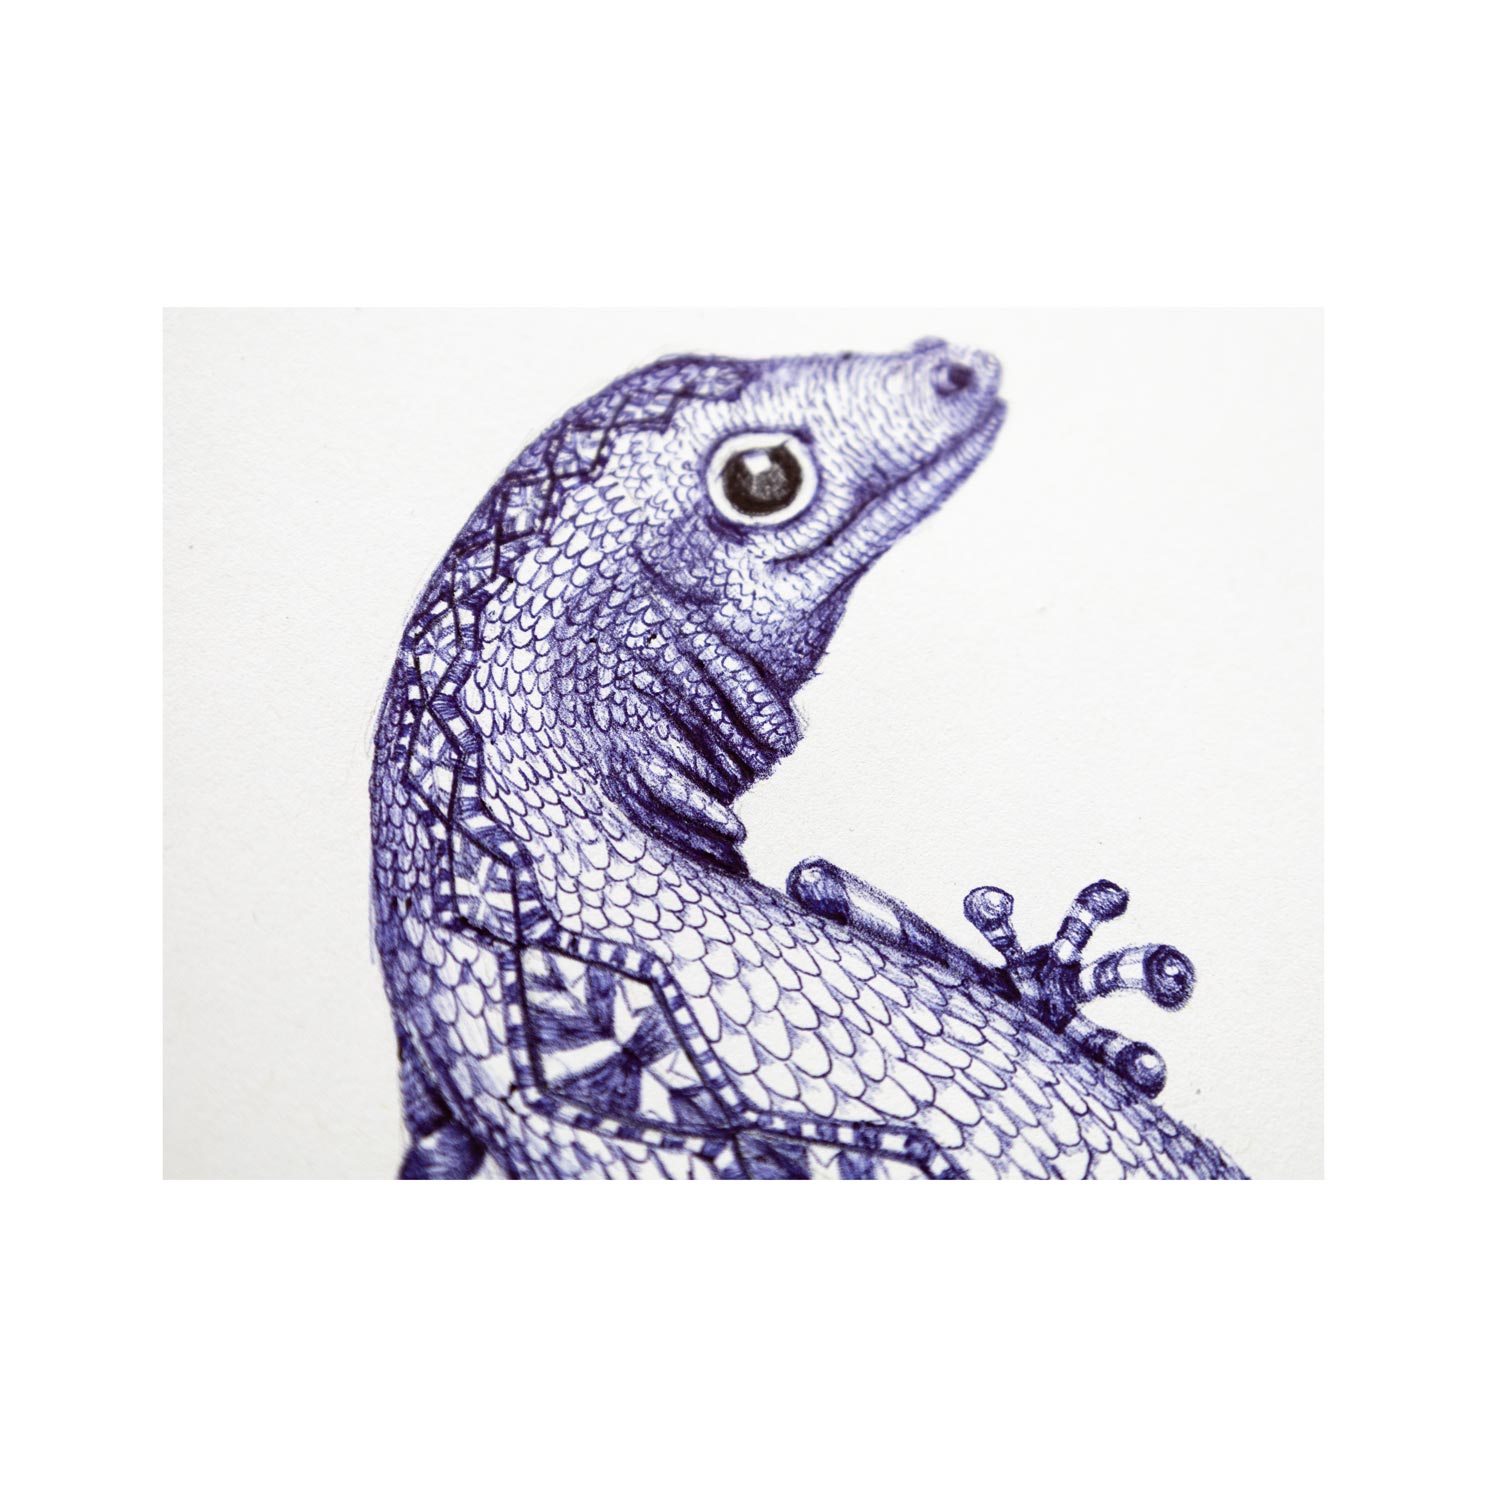 Kullitiere, Gecko, Illustration, Zeichnung, detail, Salamander, Reptil, Kugelschreiber, blau, Schuppen, Muster, Tier, Auge, Falten